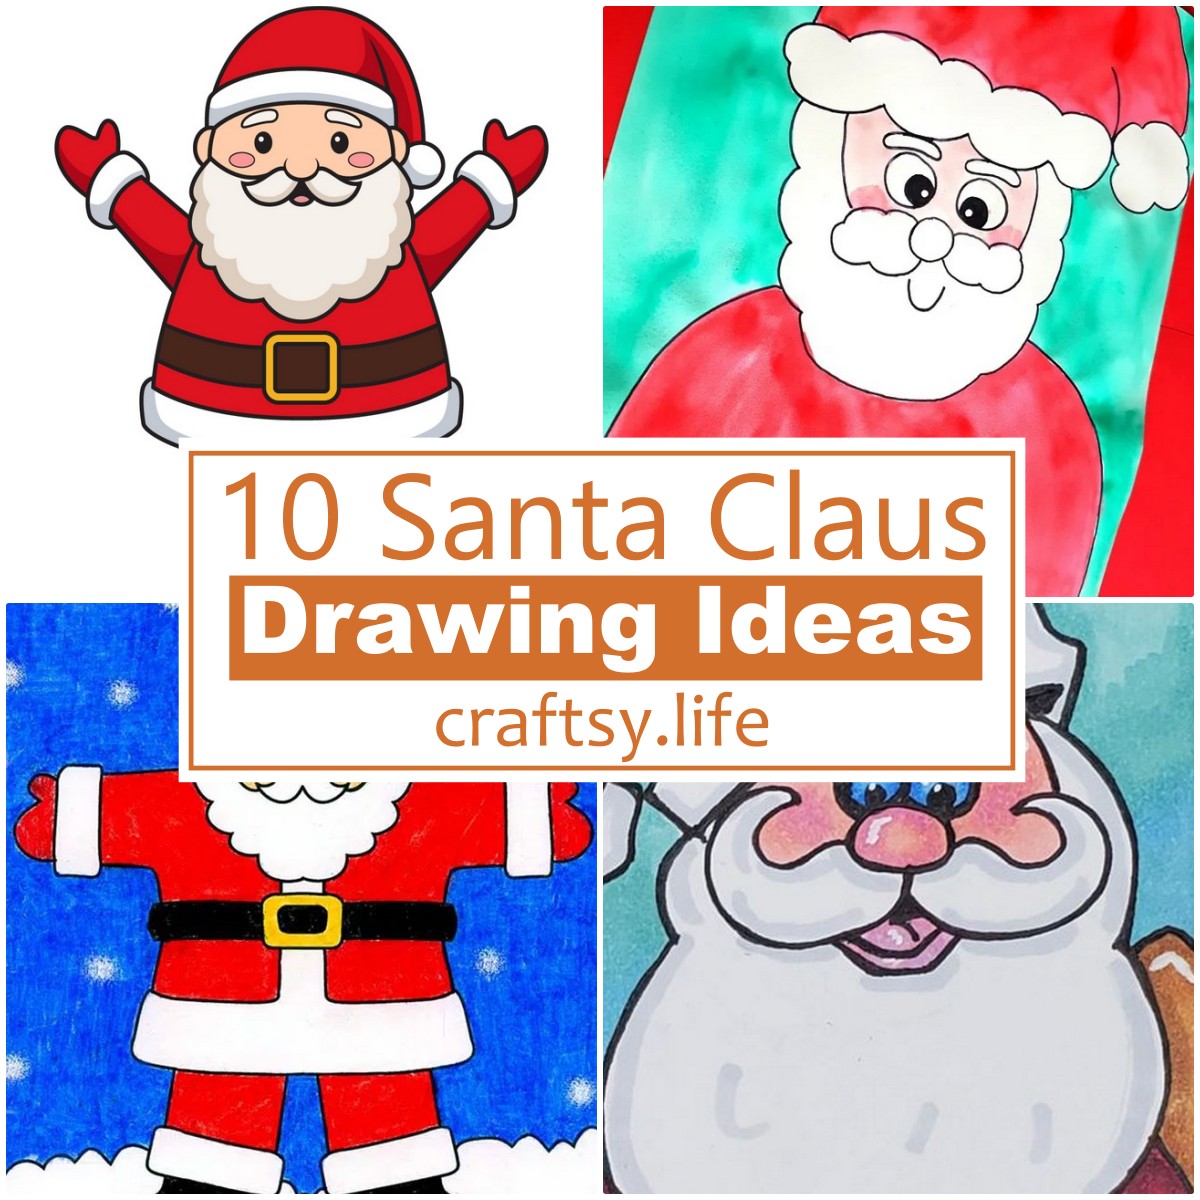 10 Santa Claus Drawing Ideas